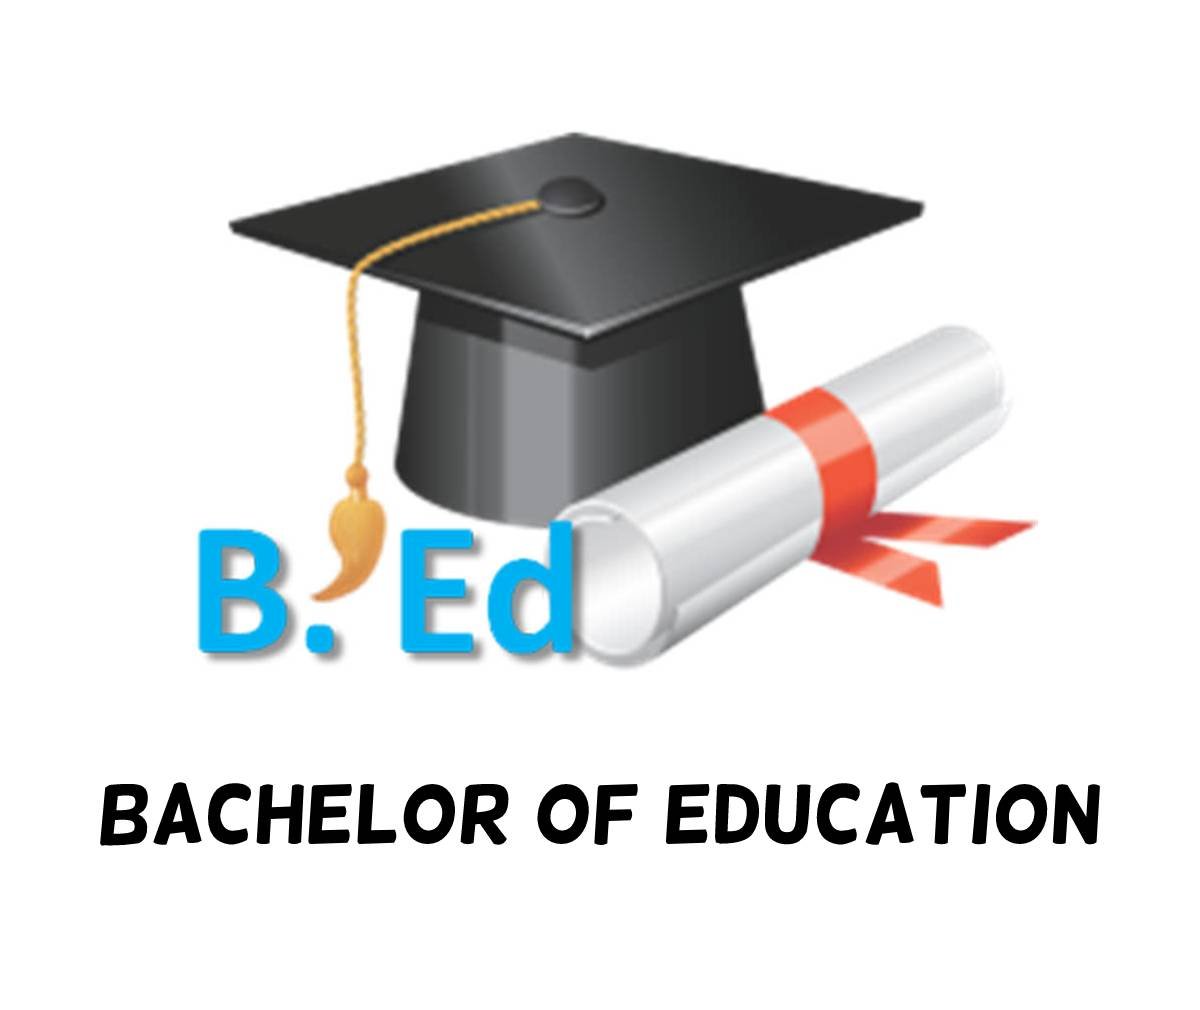 Bachelor of Education